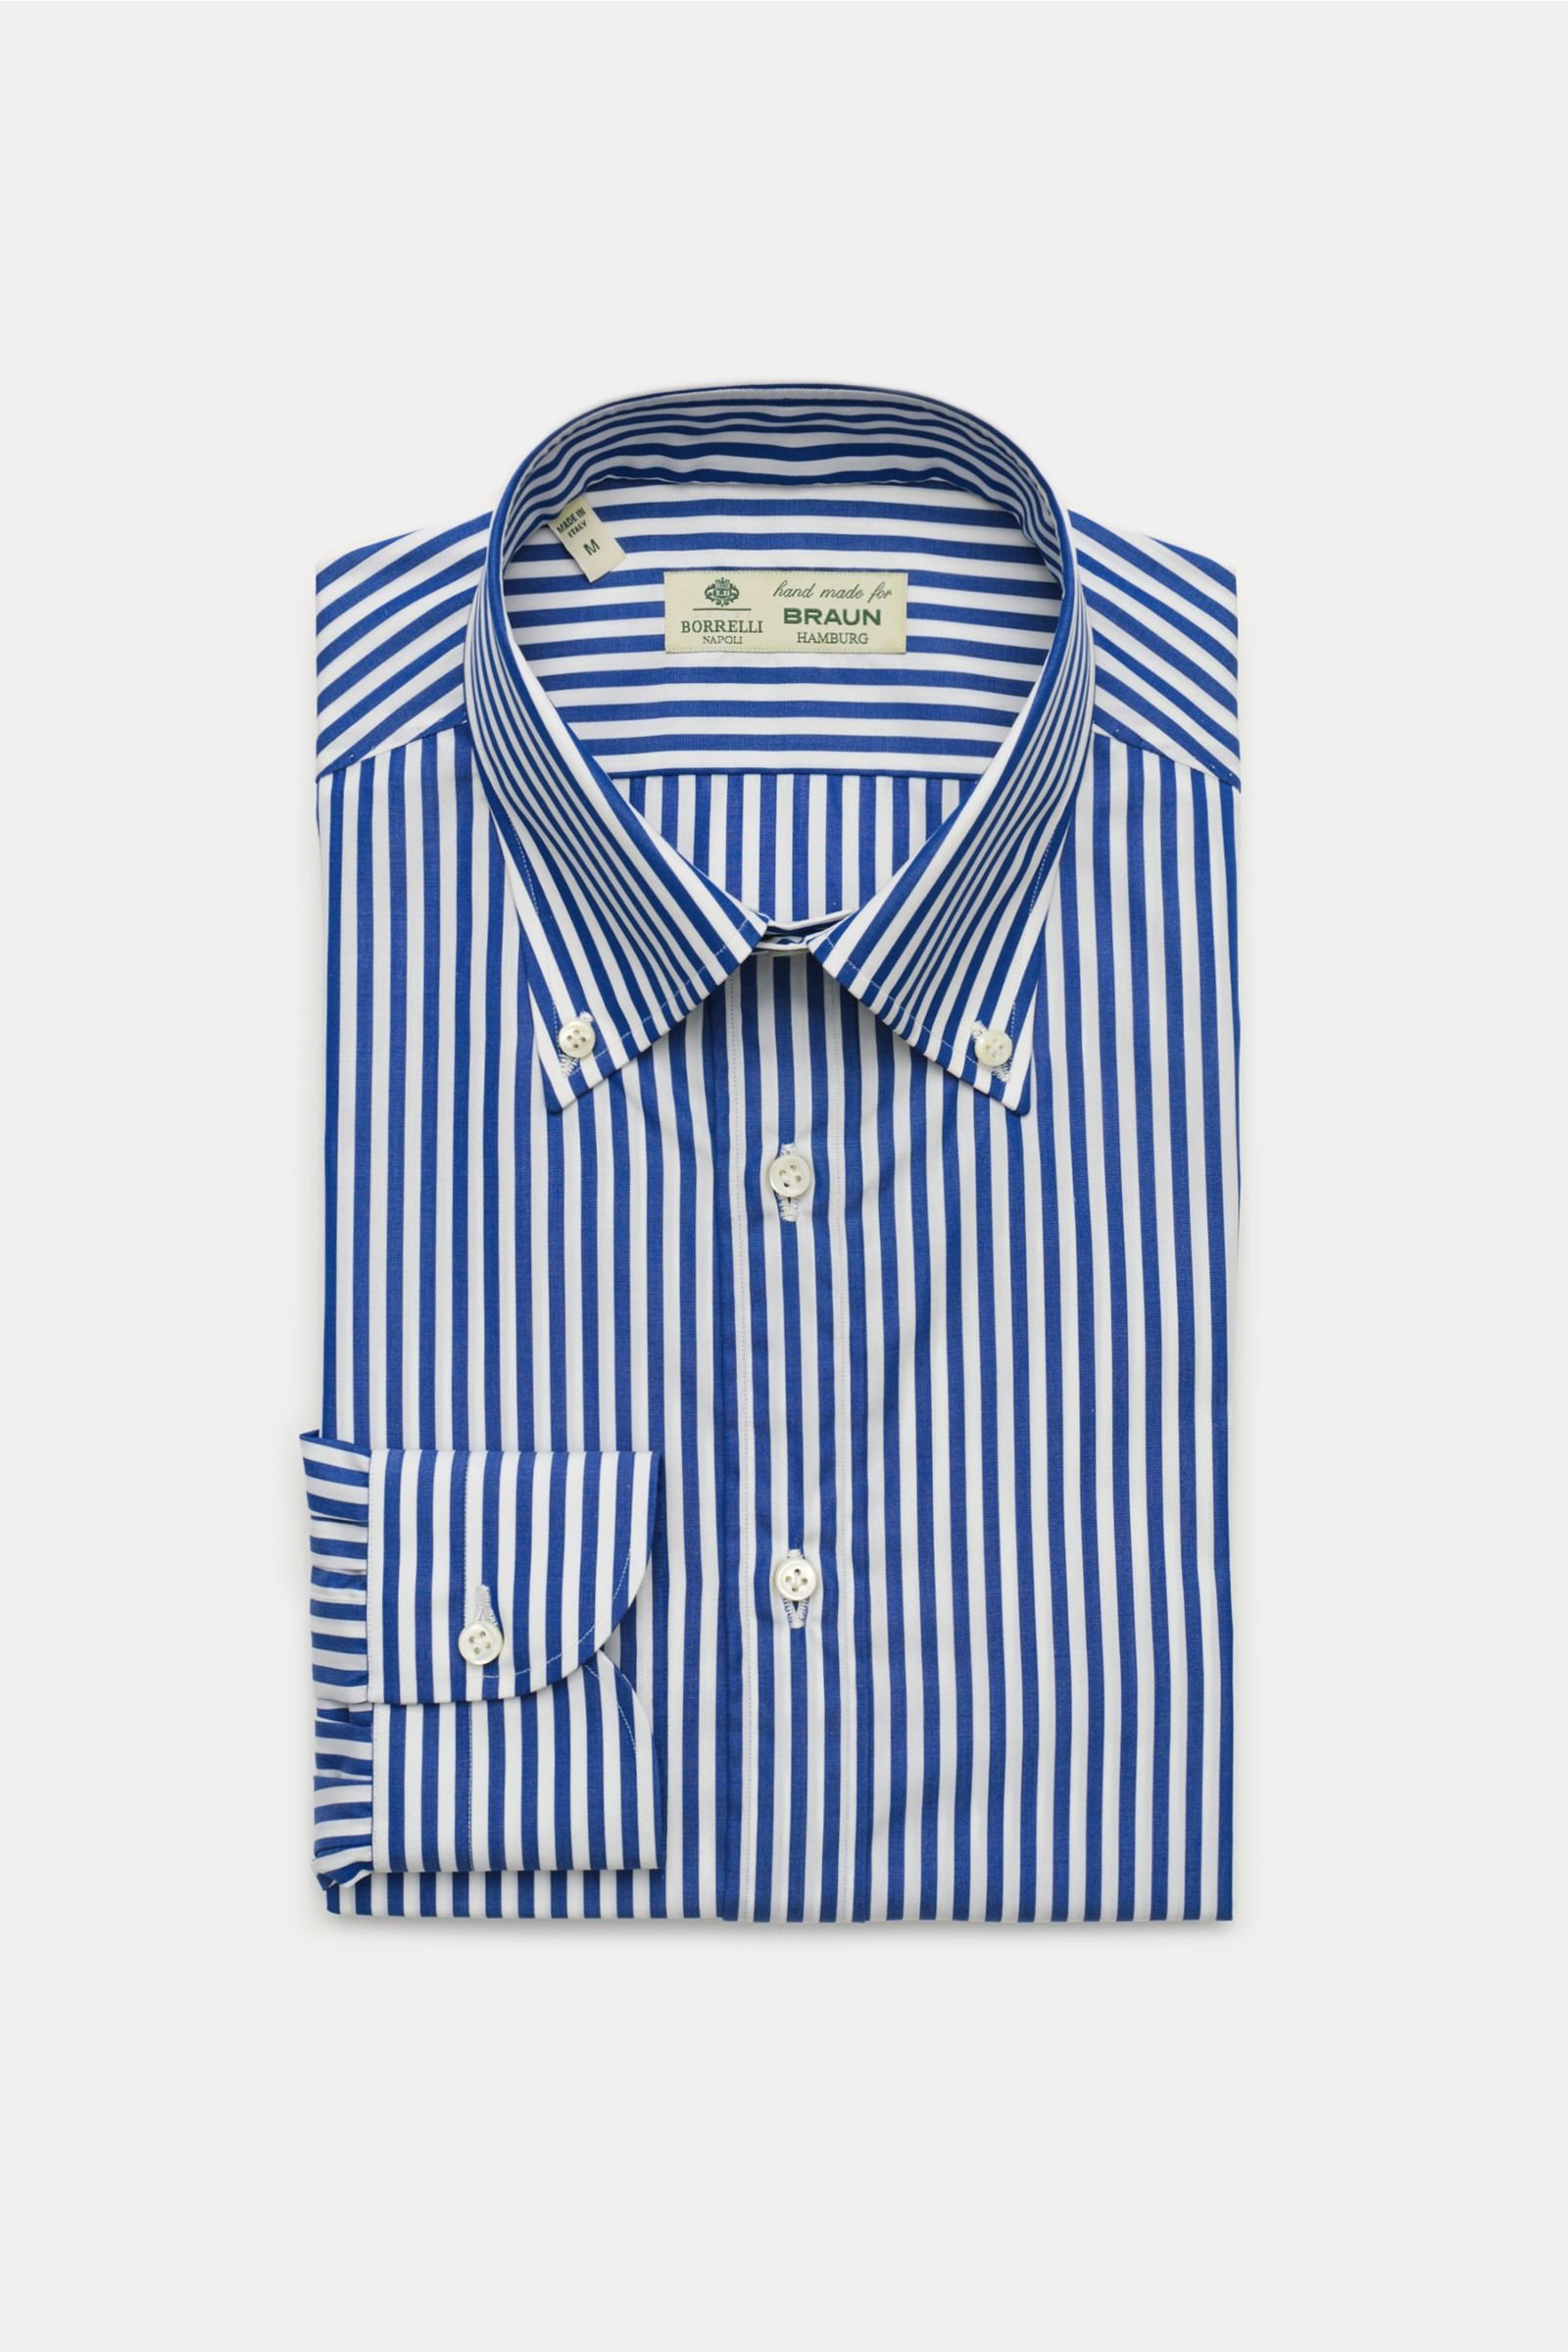 Business shirt 'Gable' button-down collar navy/white striped